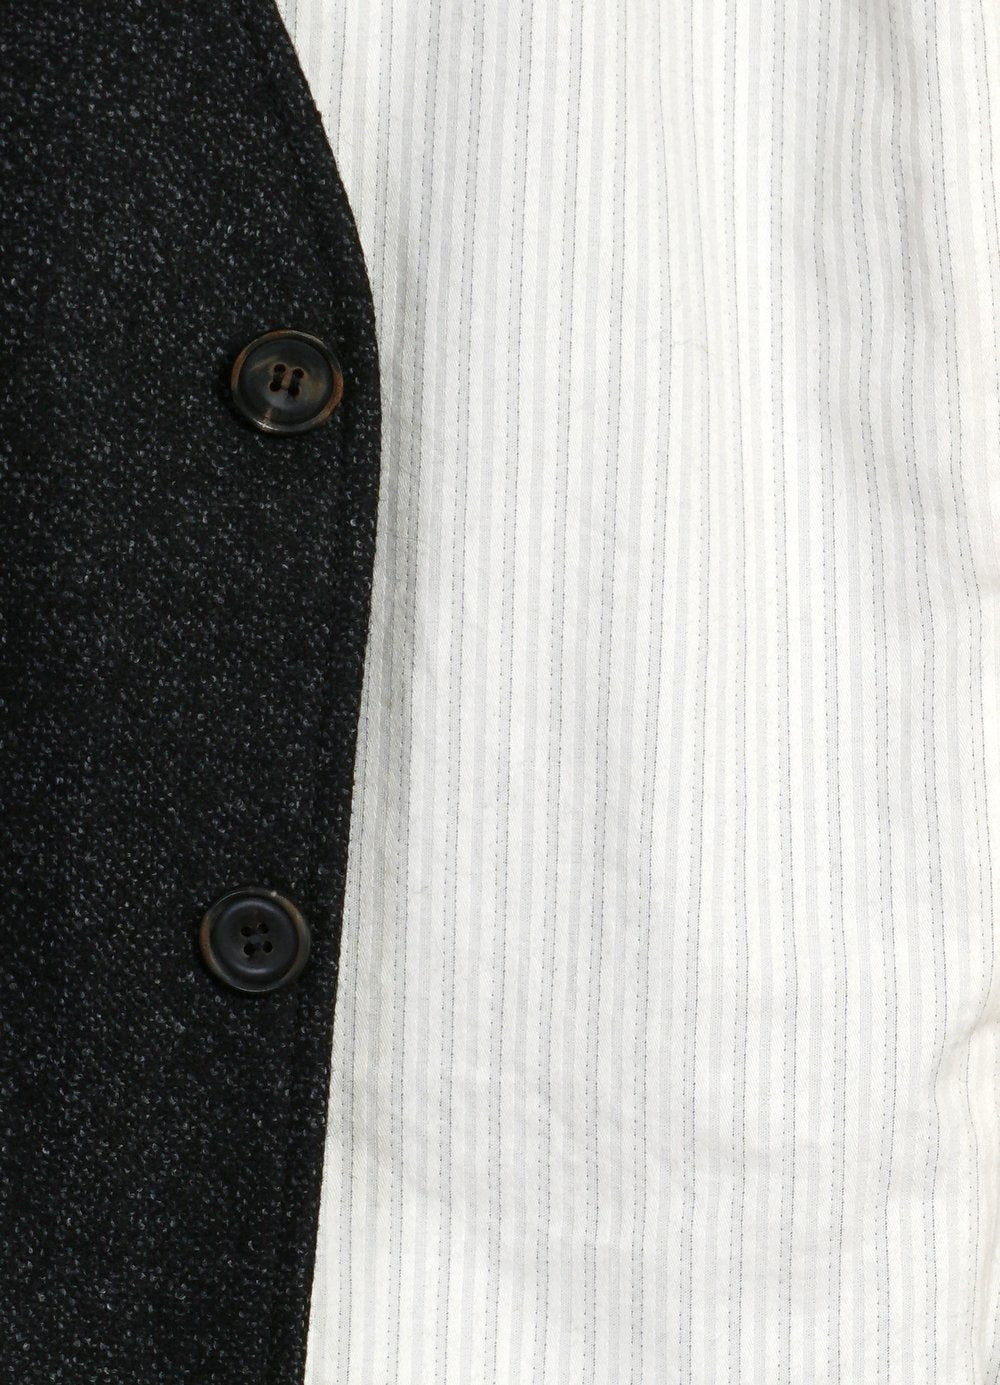 HANSEN GARMENTS - DANNY | Classic Waistcoat | Black Marble - HANSEN Garments